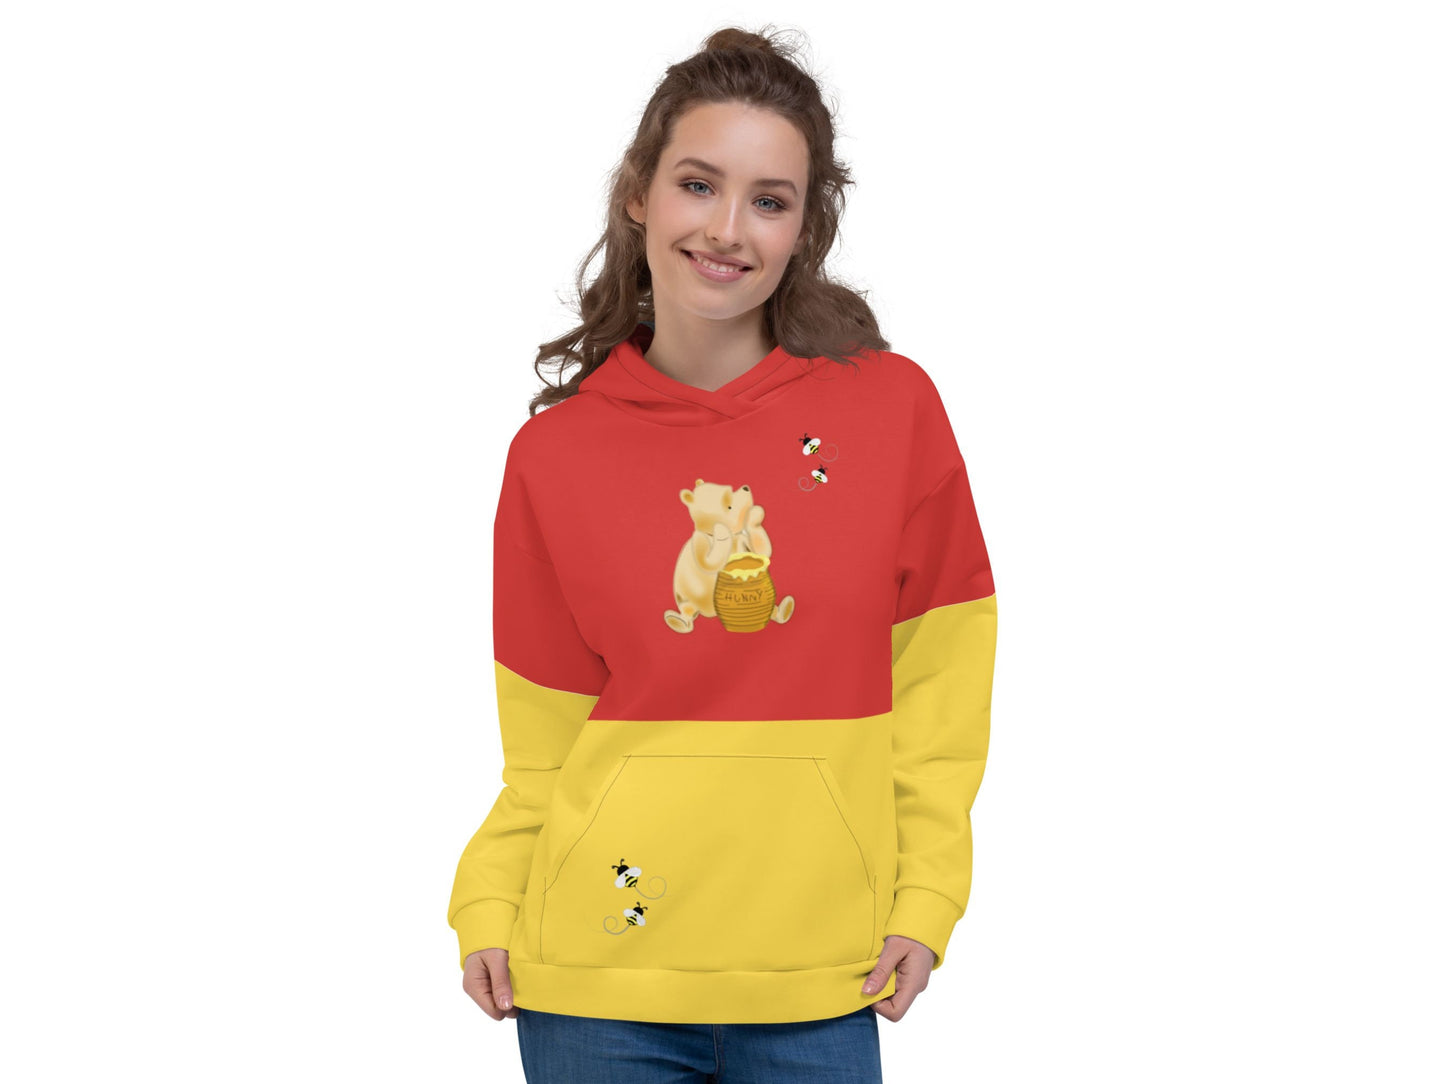 Winnie the Pooh Hoodie, Vintage Pooh, Unisex Hoodie, Sweatshirt, Gift for Him, Gift for Her, Cosplay, Halloween, Birthday Gift